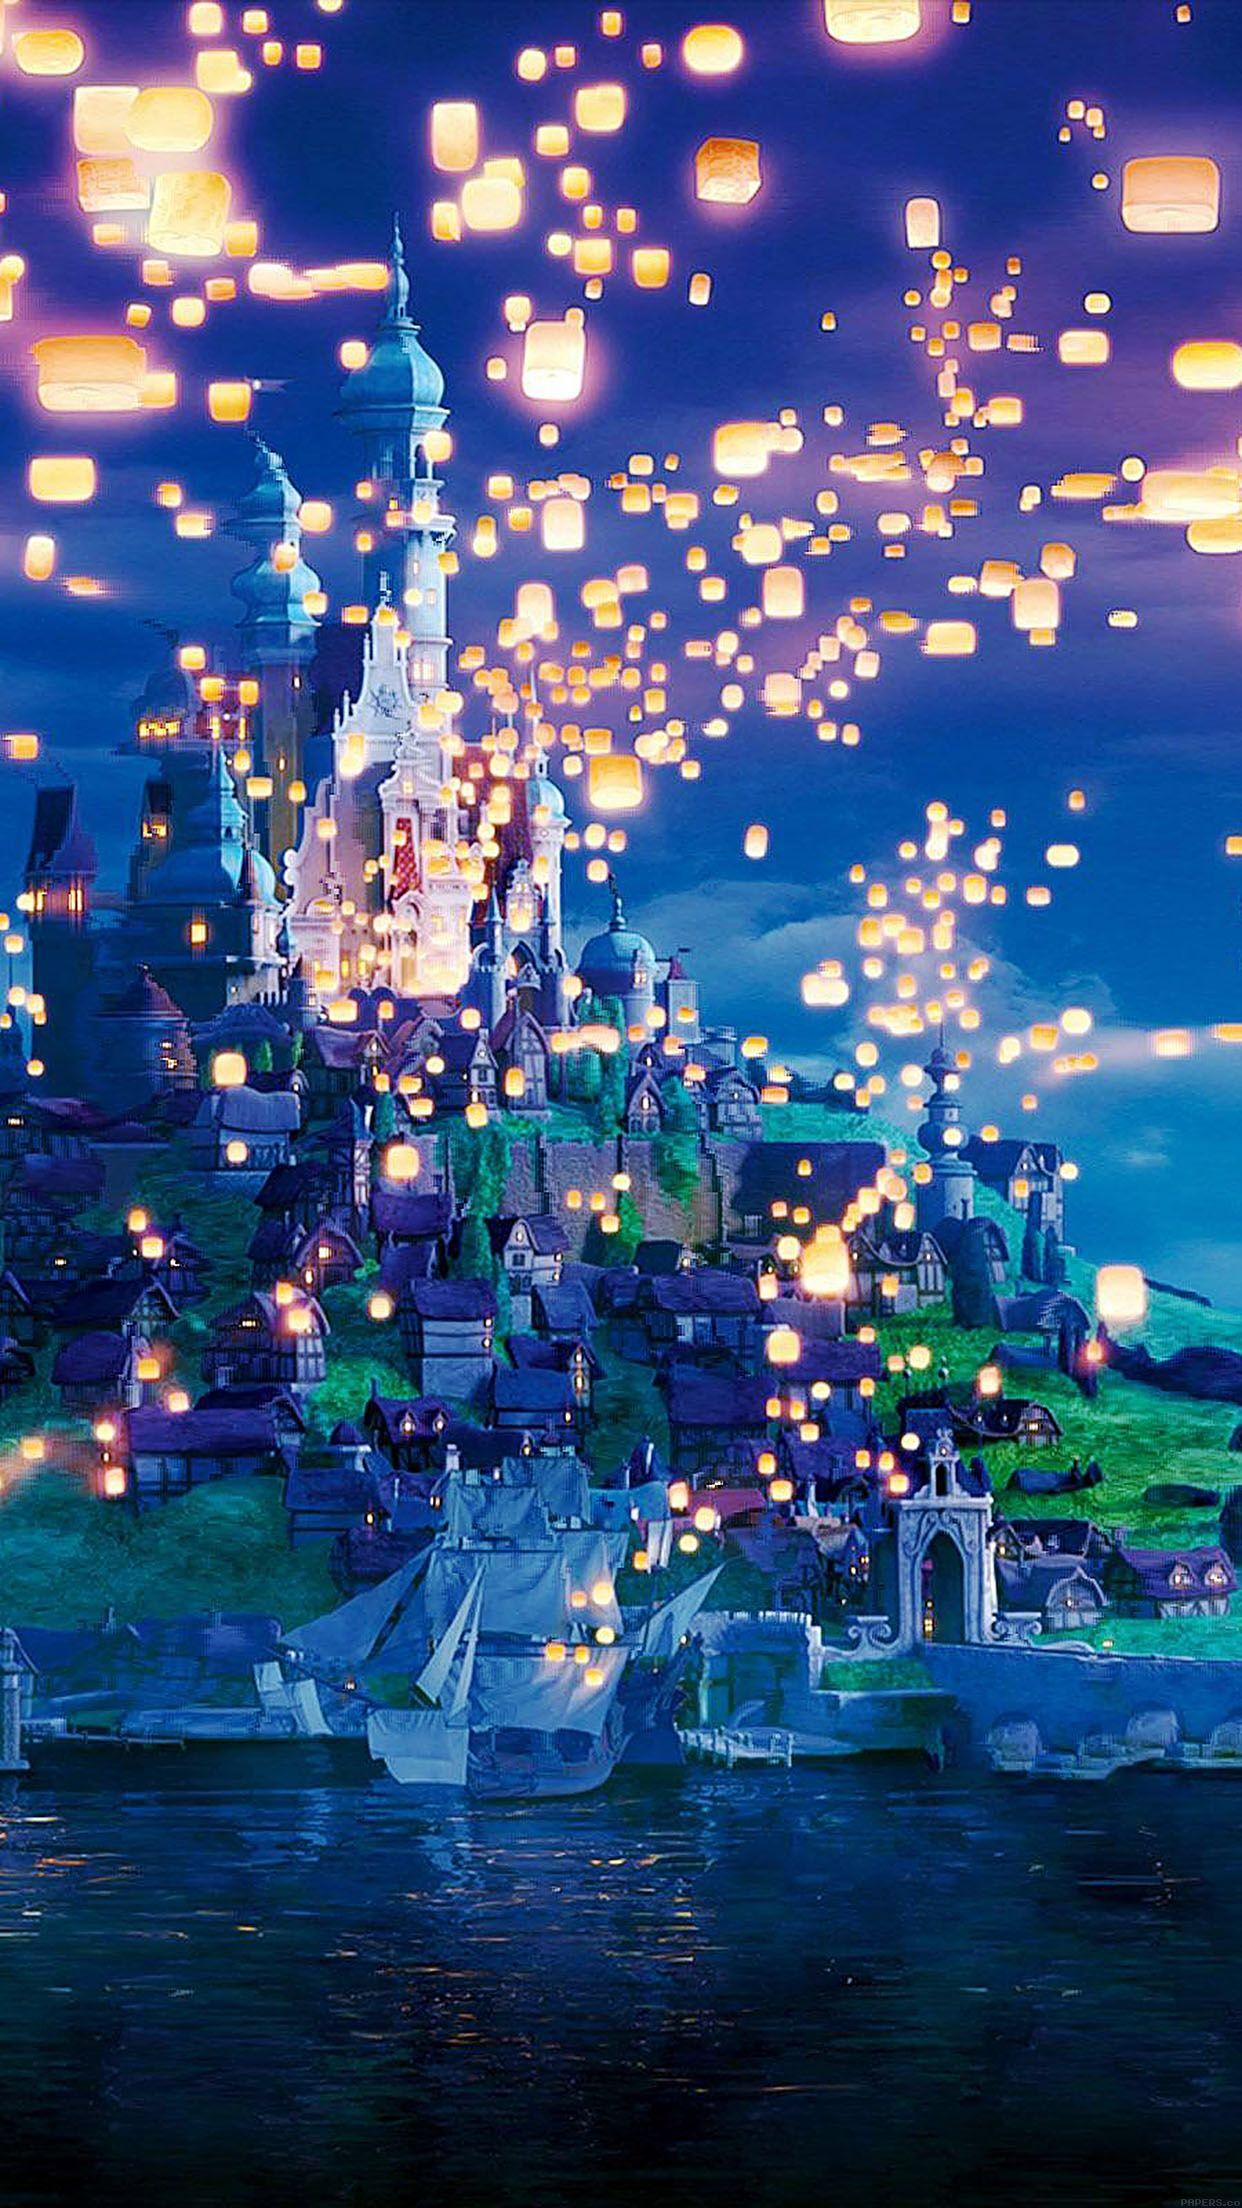 Tangled movie, lanterns. Disney background, Disney